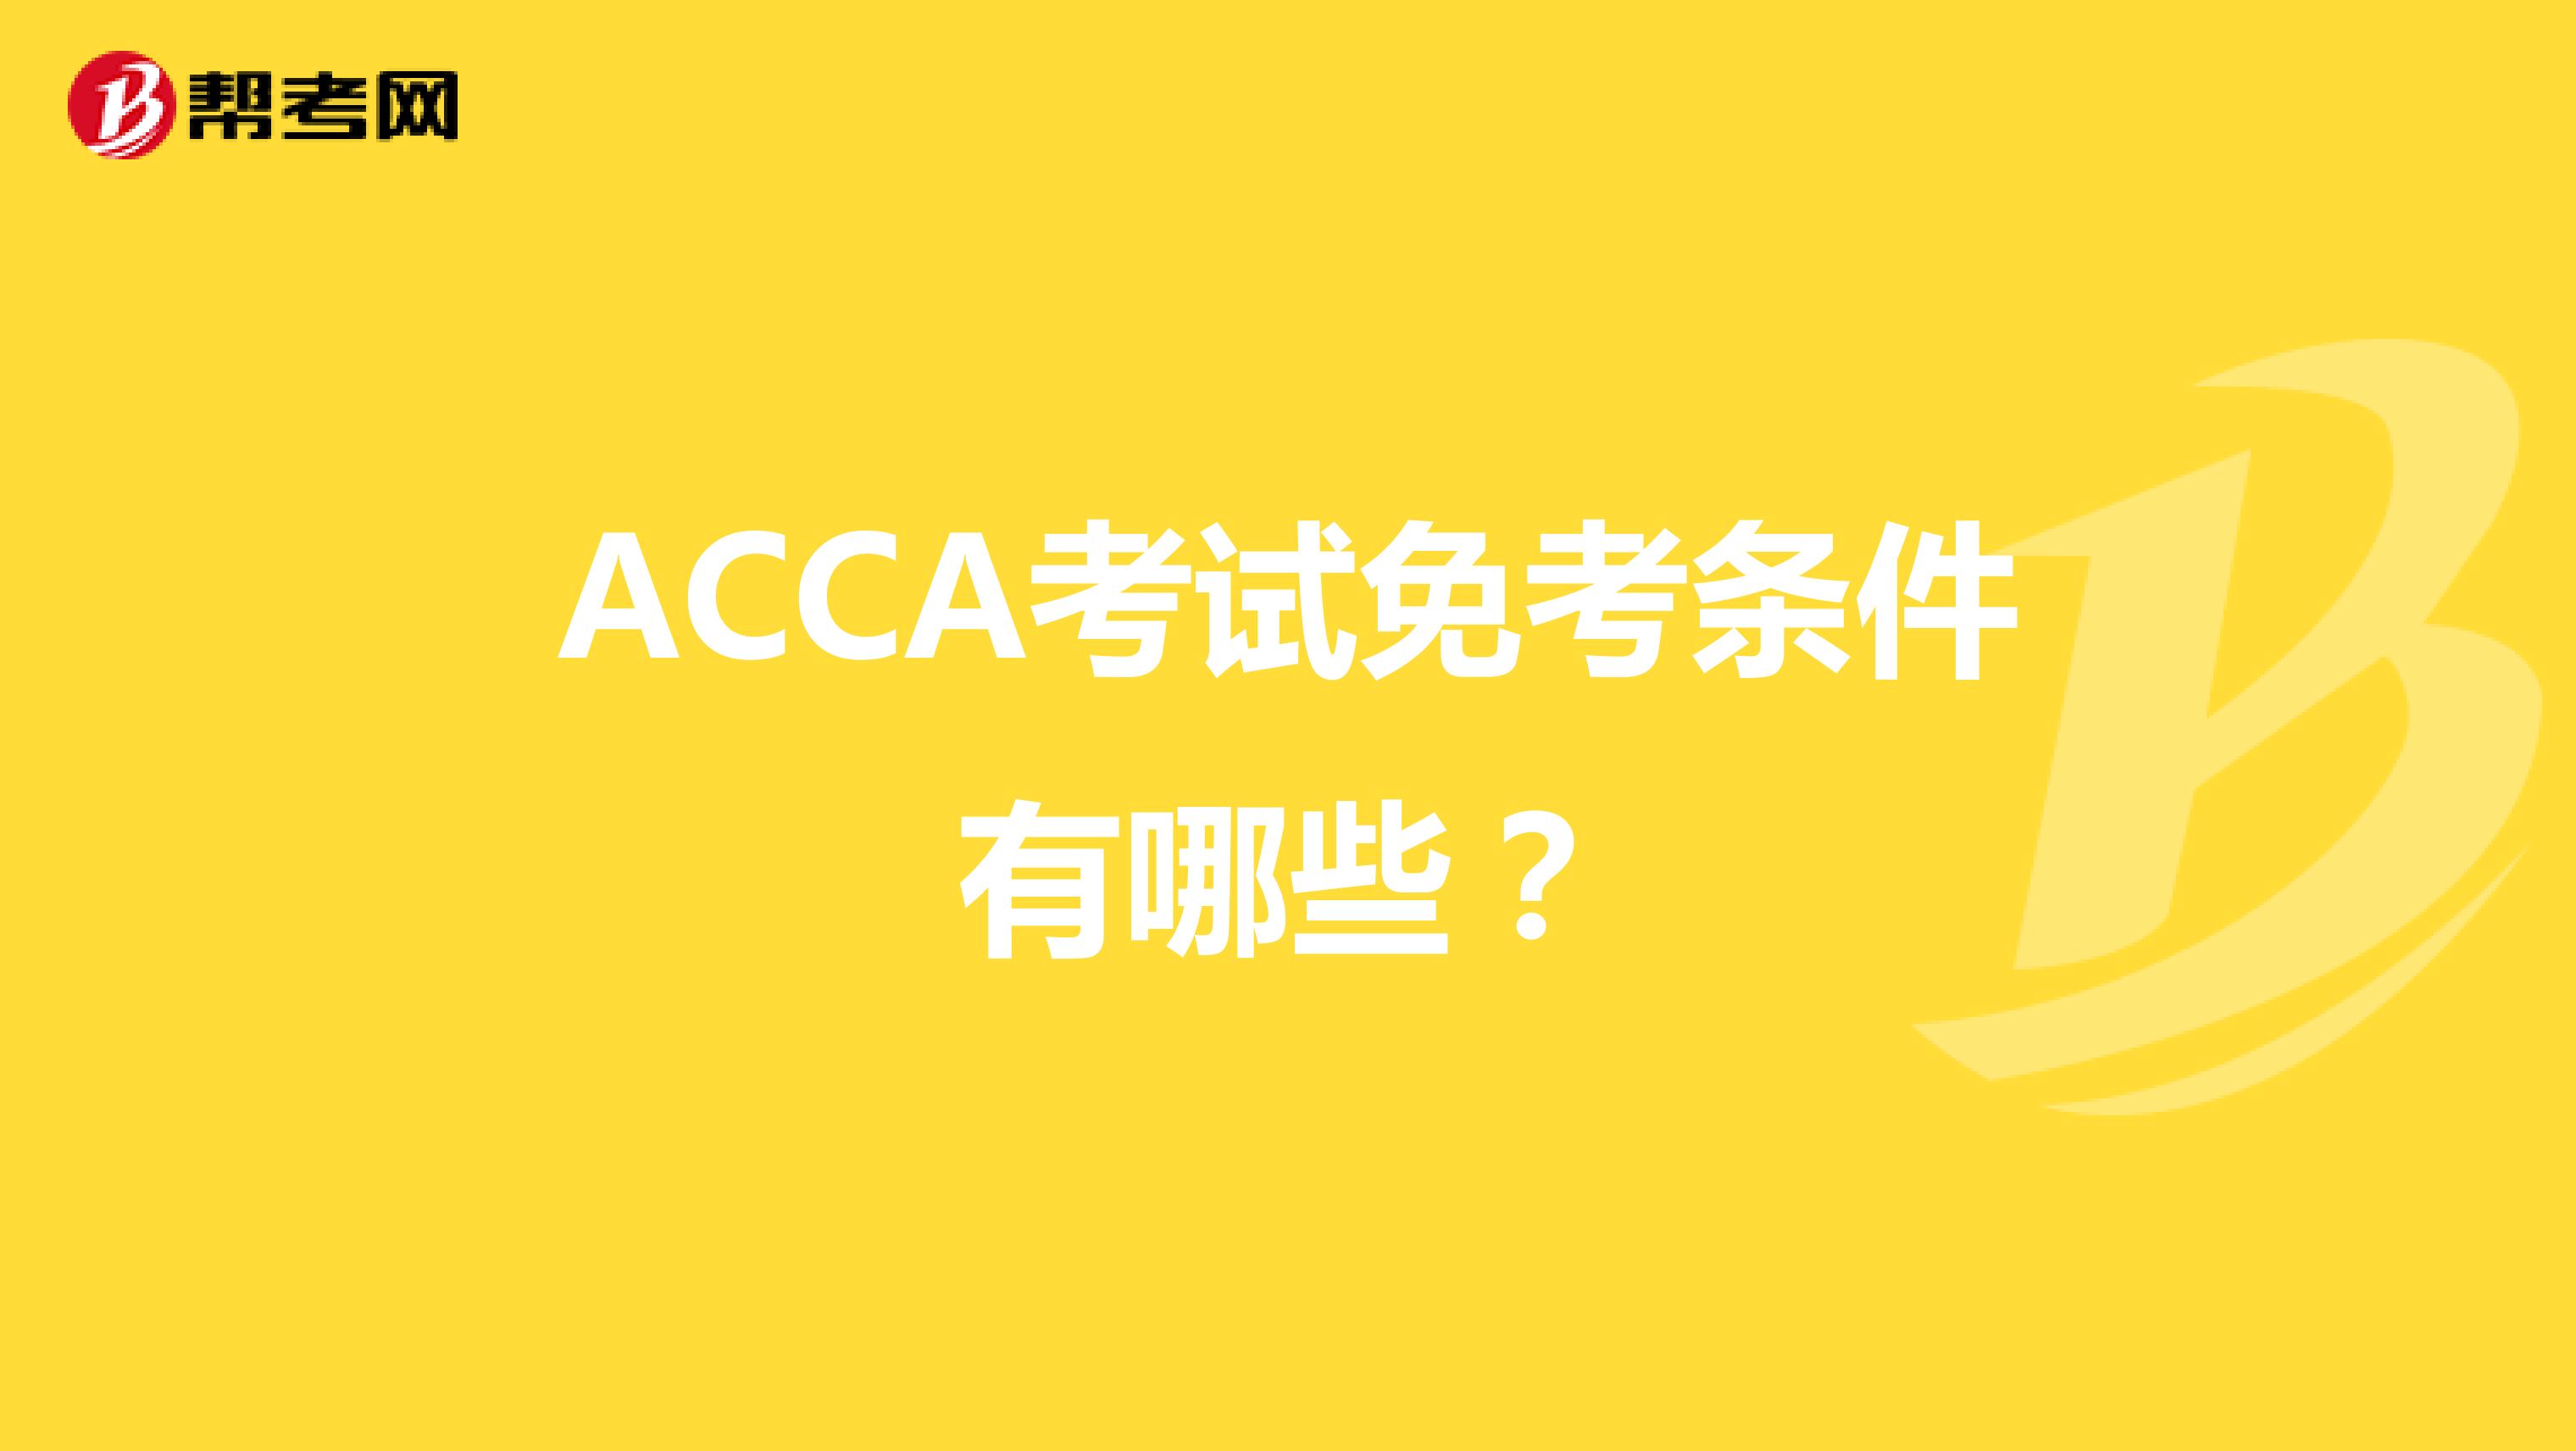 ACCA考试免考条件有哪些？